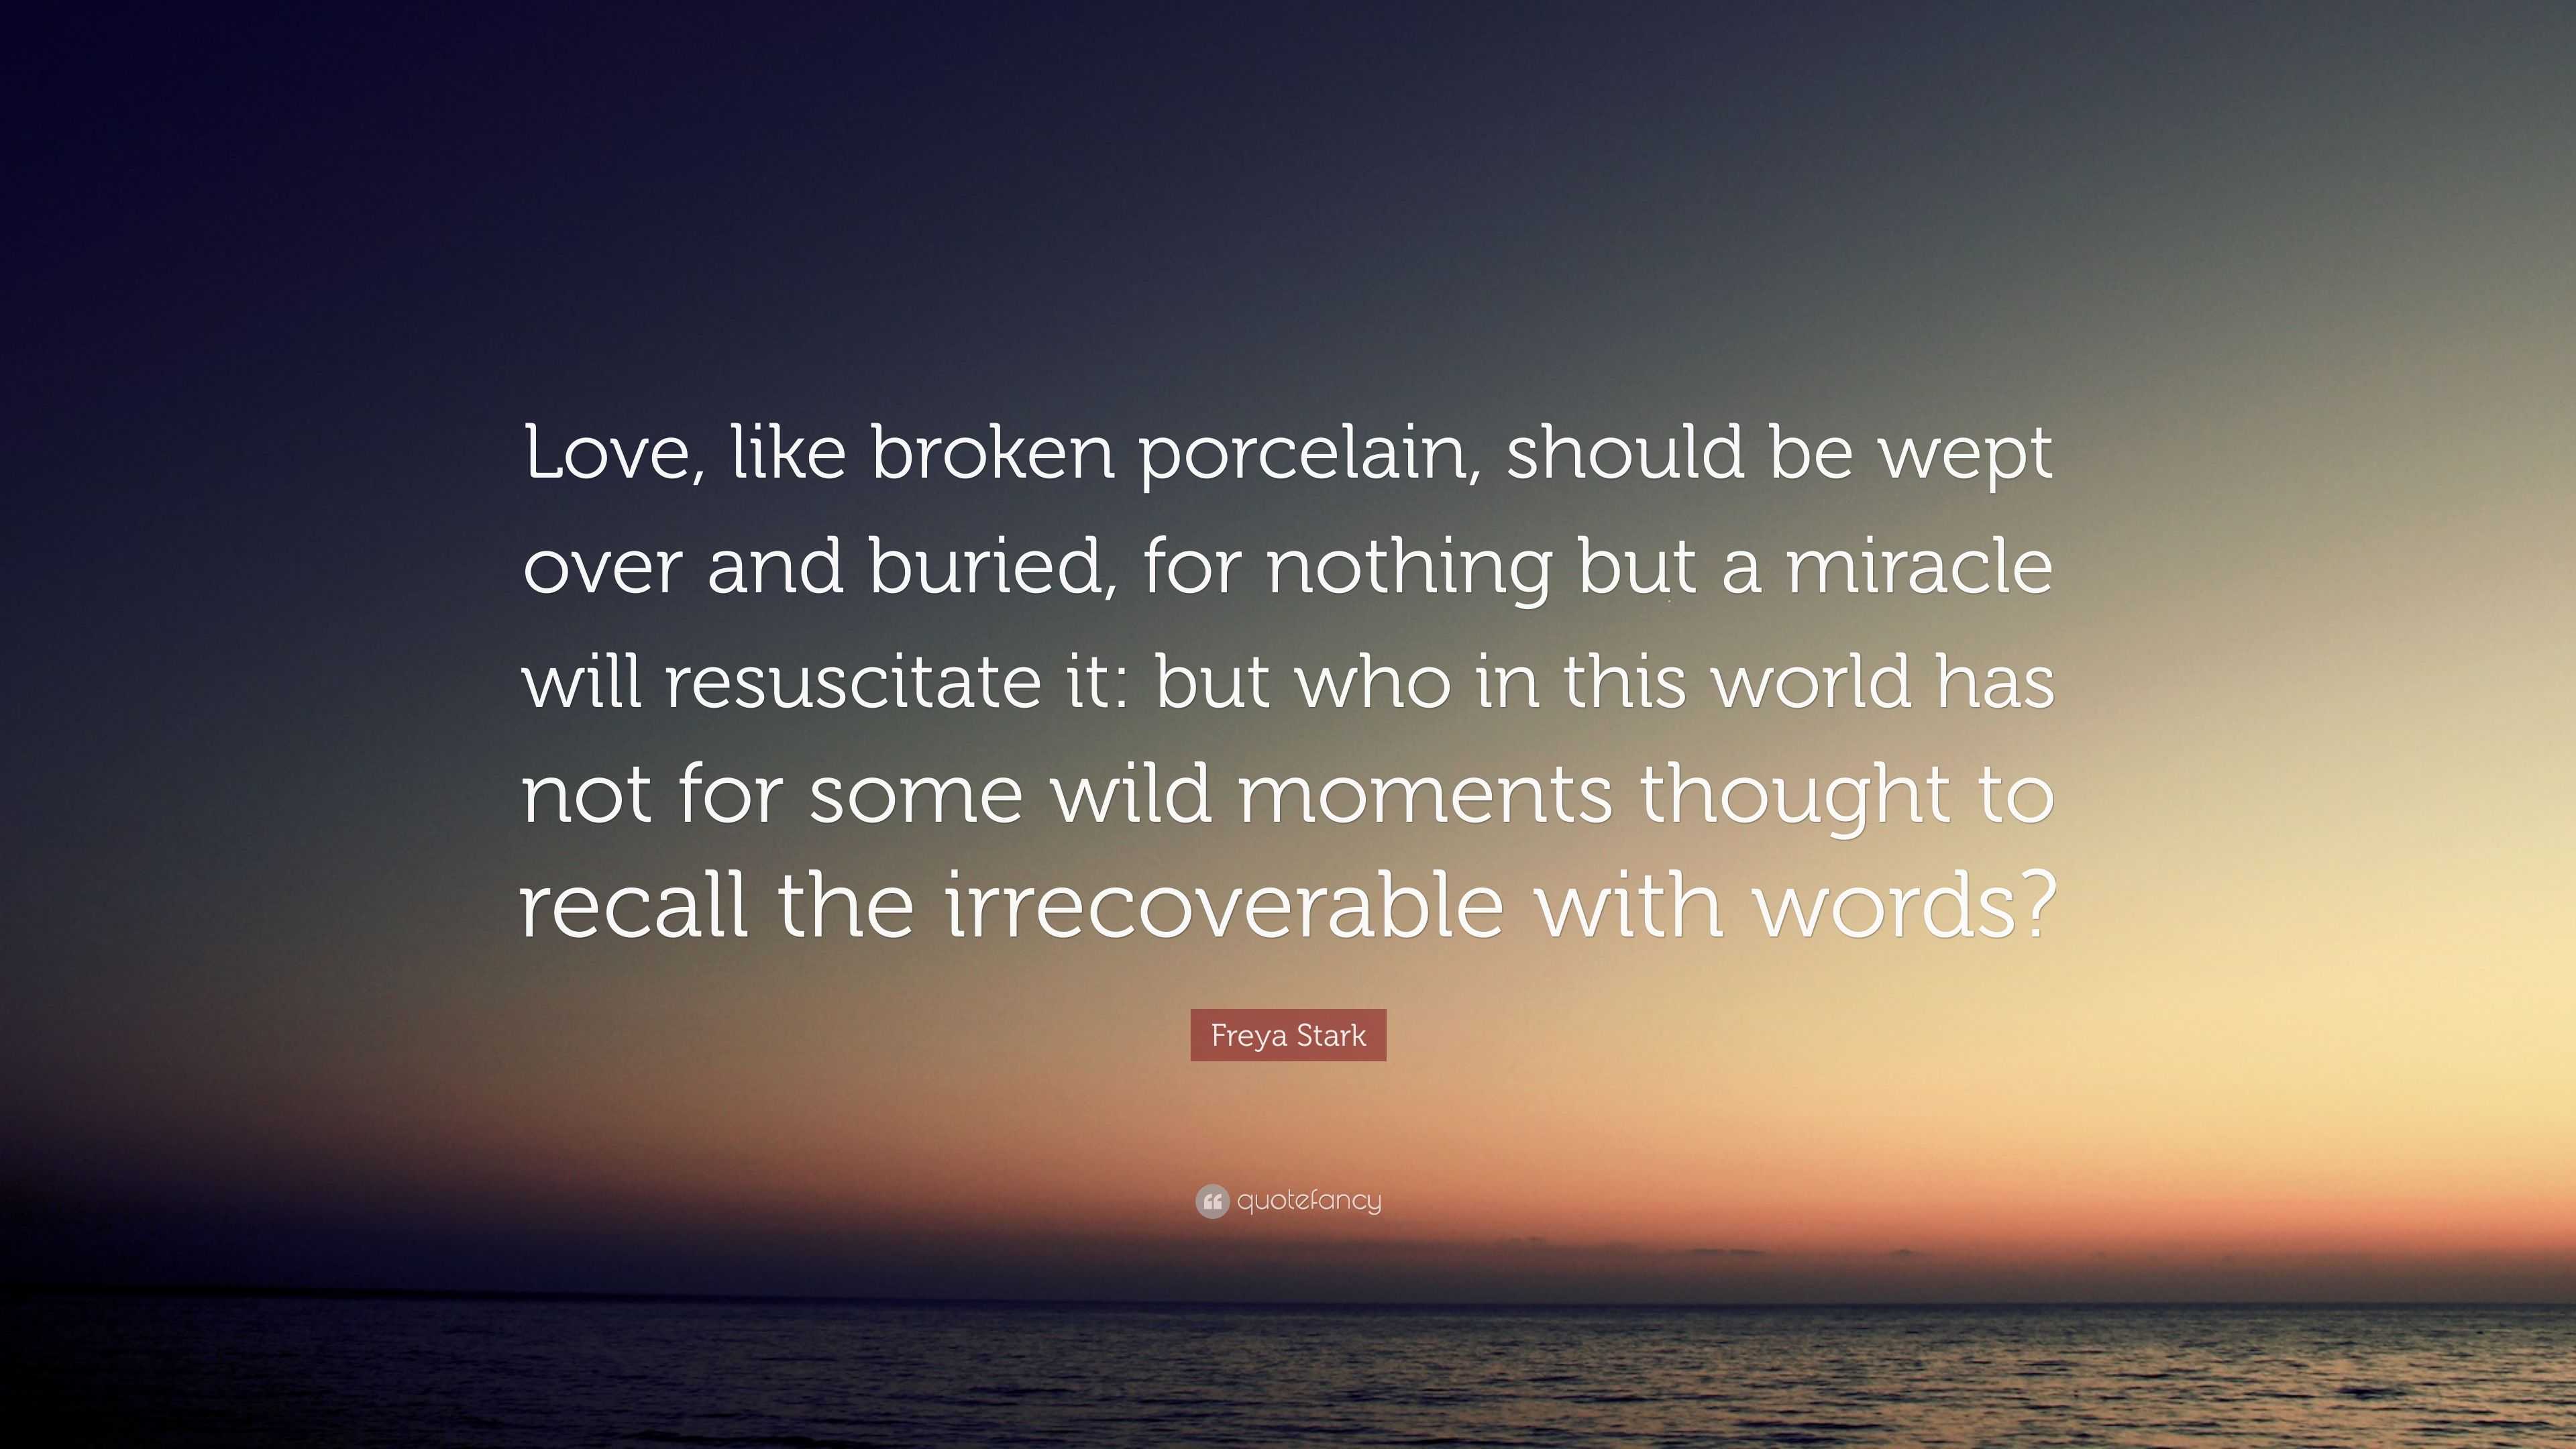 Freya Stark Quote: “Love, like broken porcelain, should be wept over ...